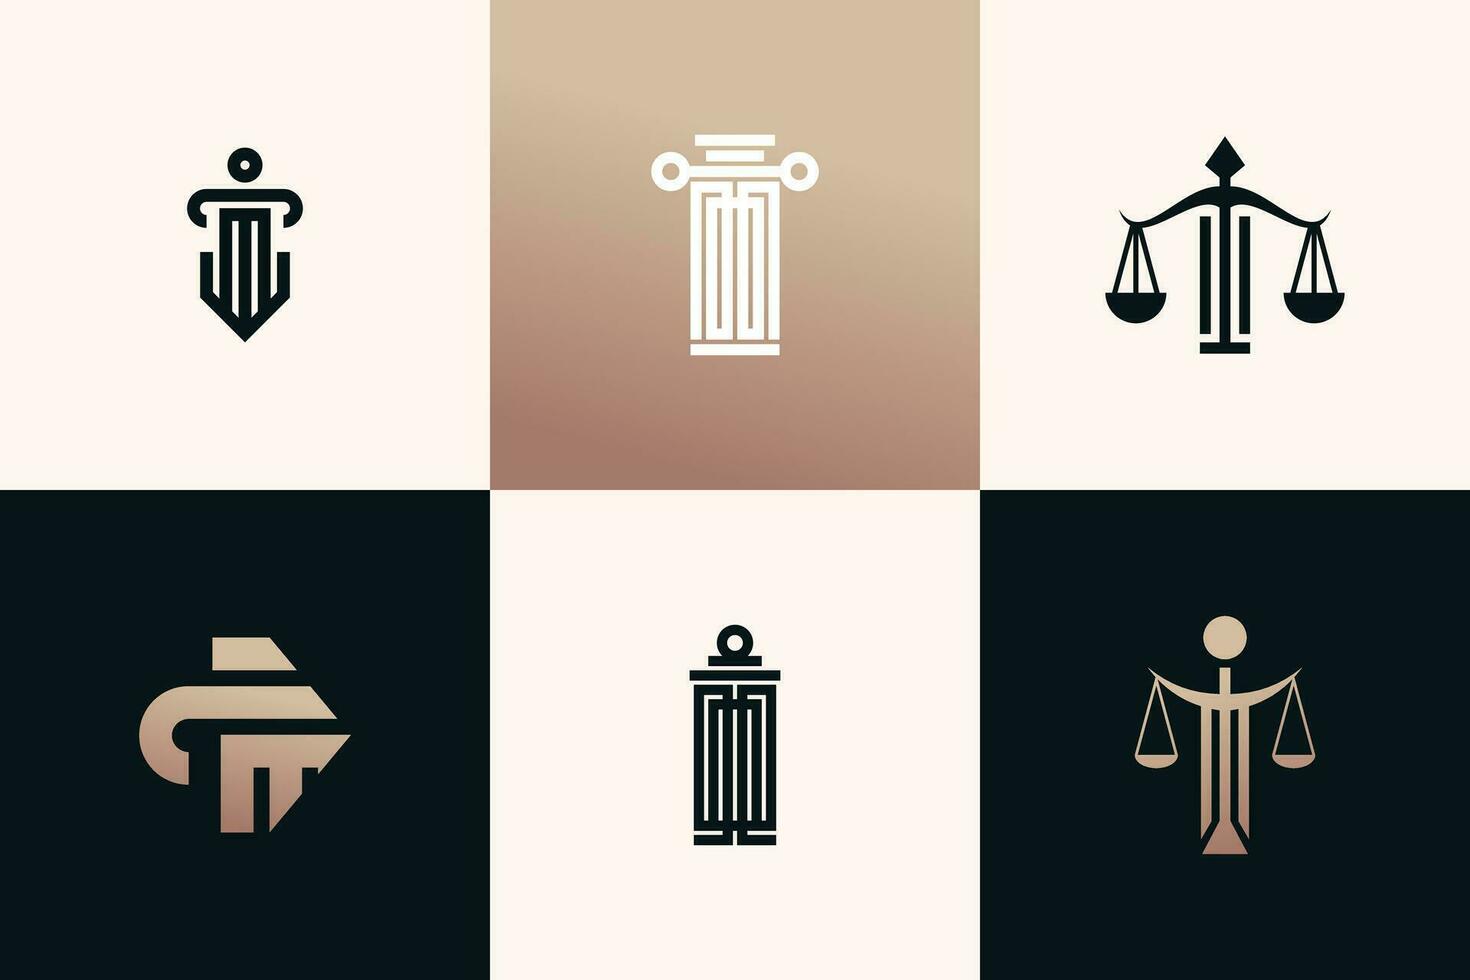 advokat logotyp samling med kreativ unik design vektor